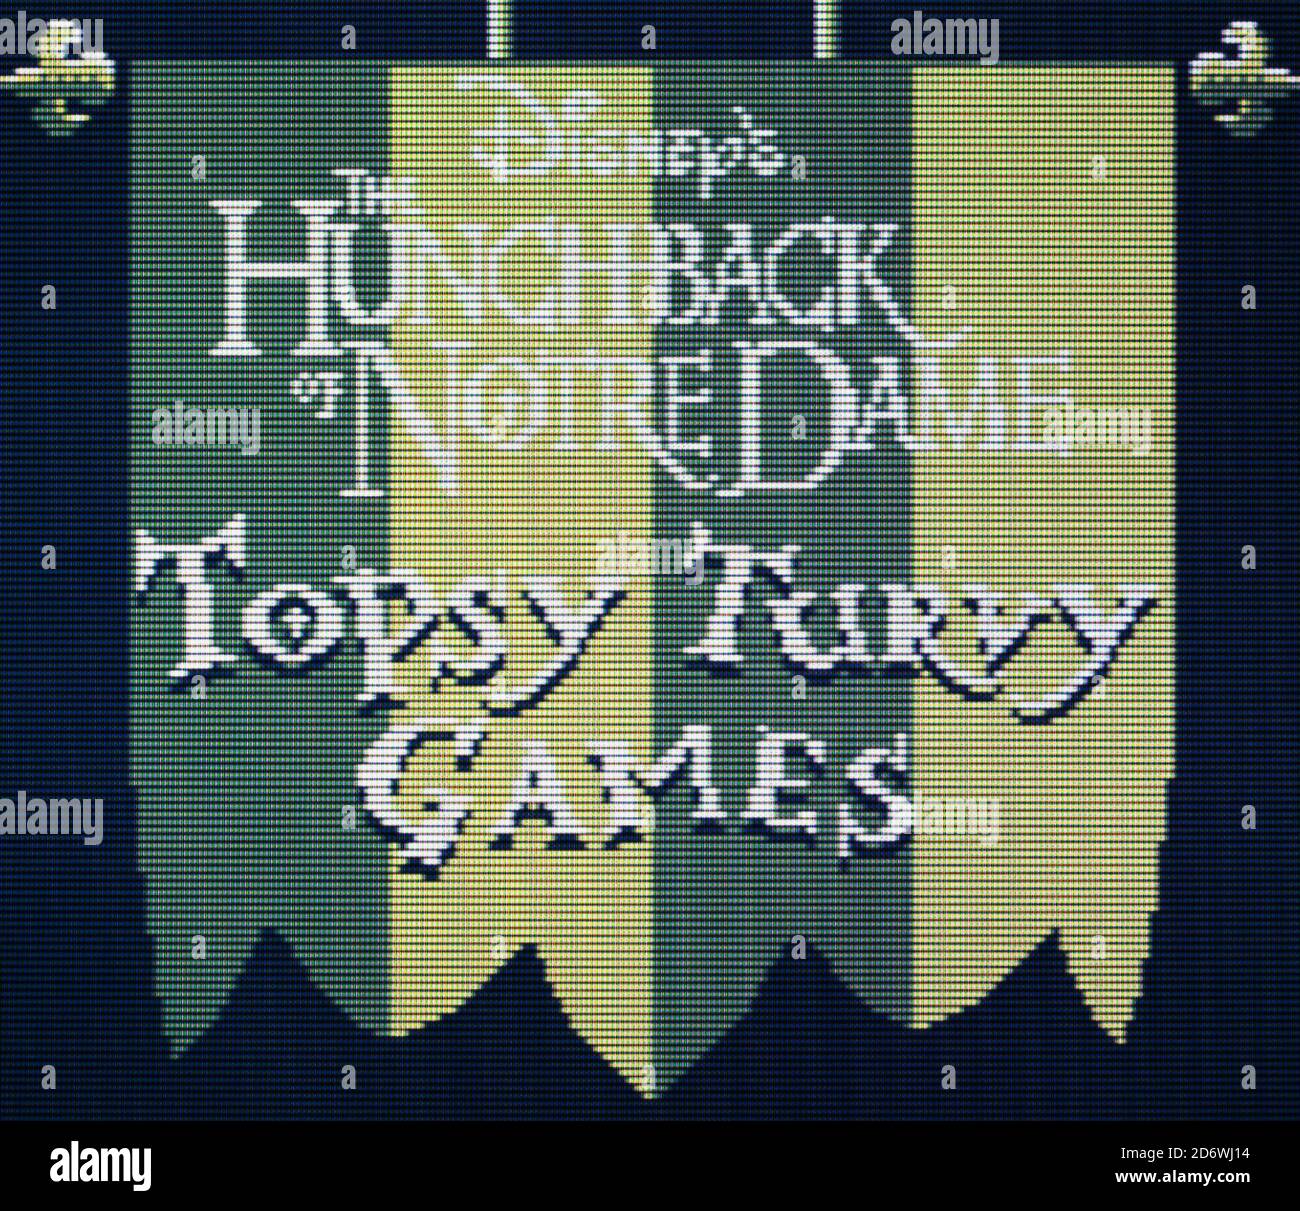 Hunchback de notre Dame - Topsy Turvy Games - Nintendo Gameboy Videogame - usage éditorial uniquement Banque D'Images